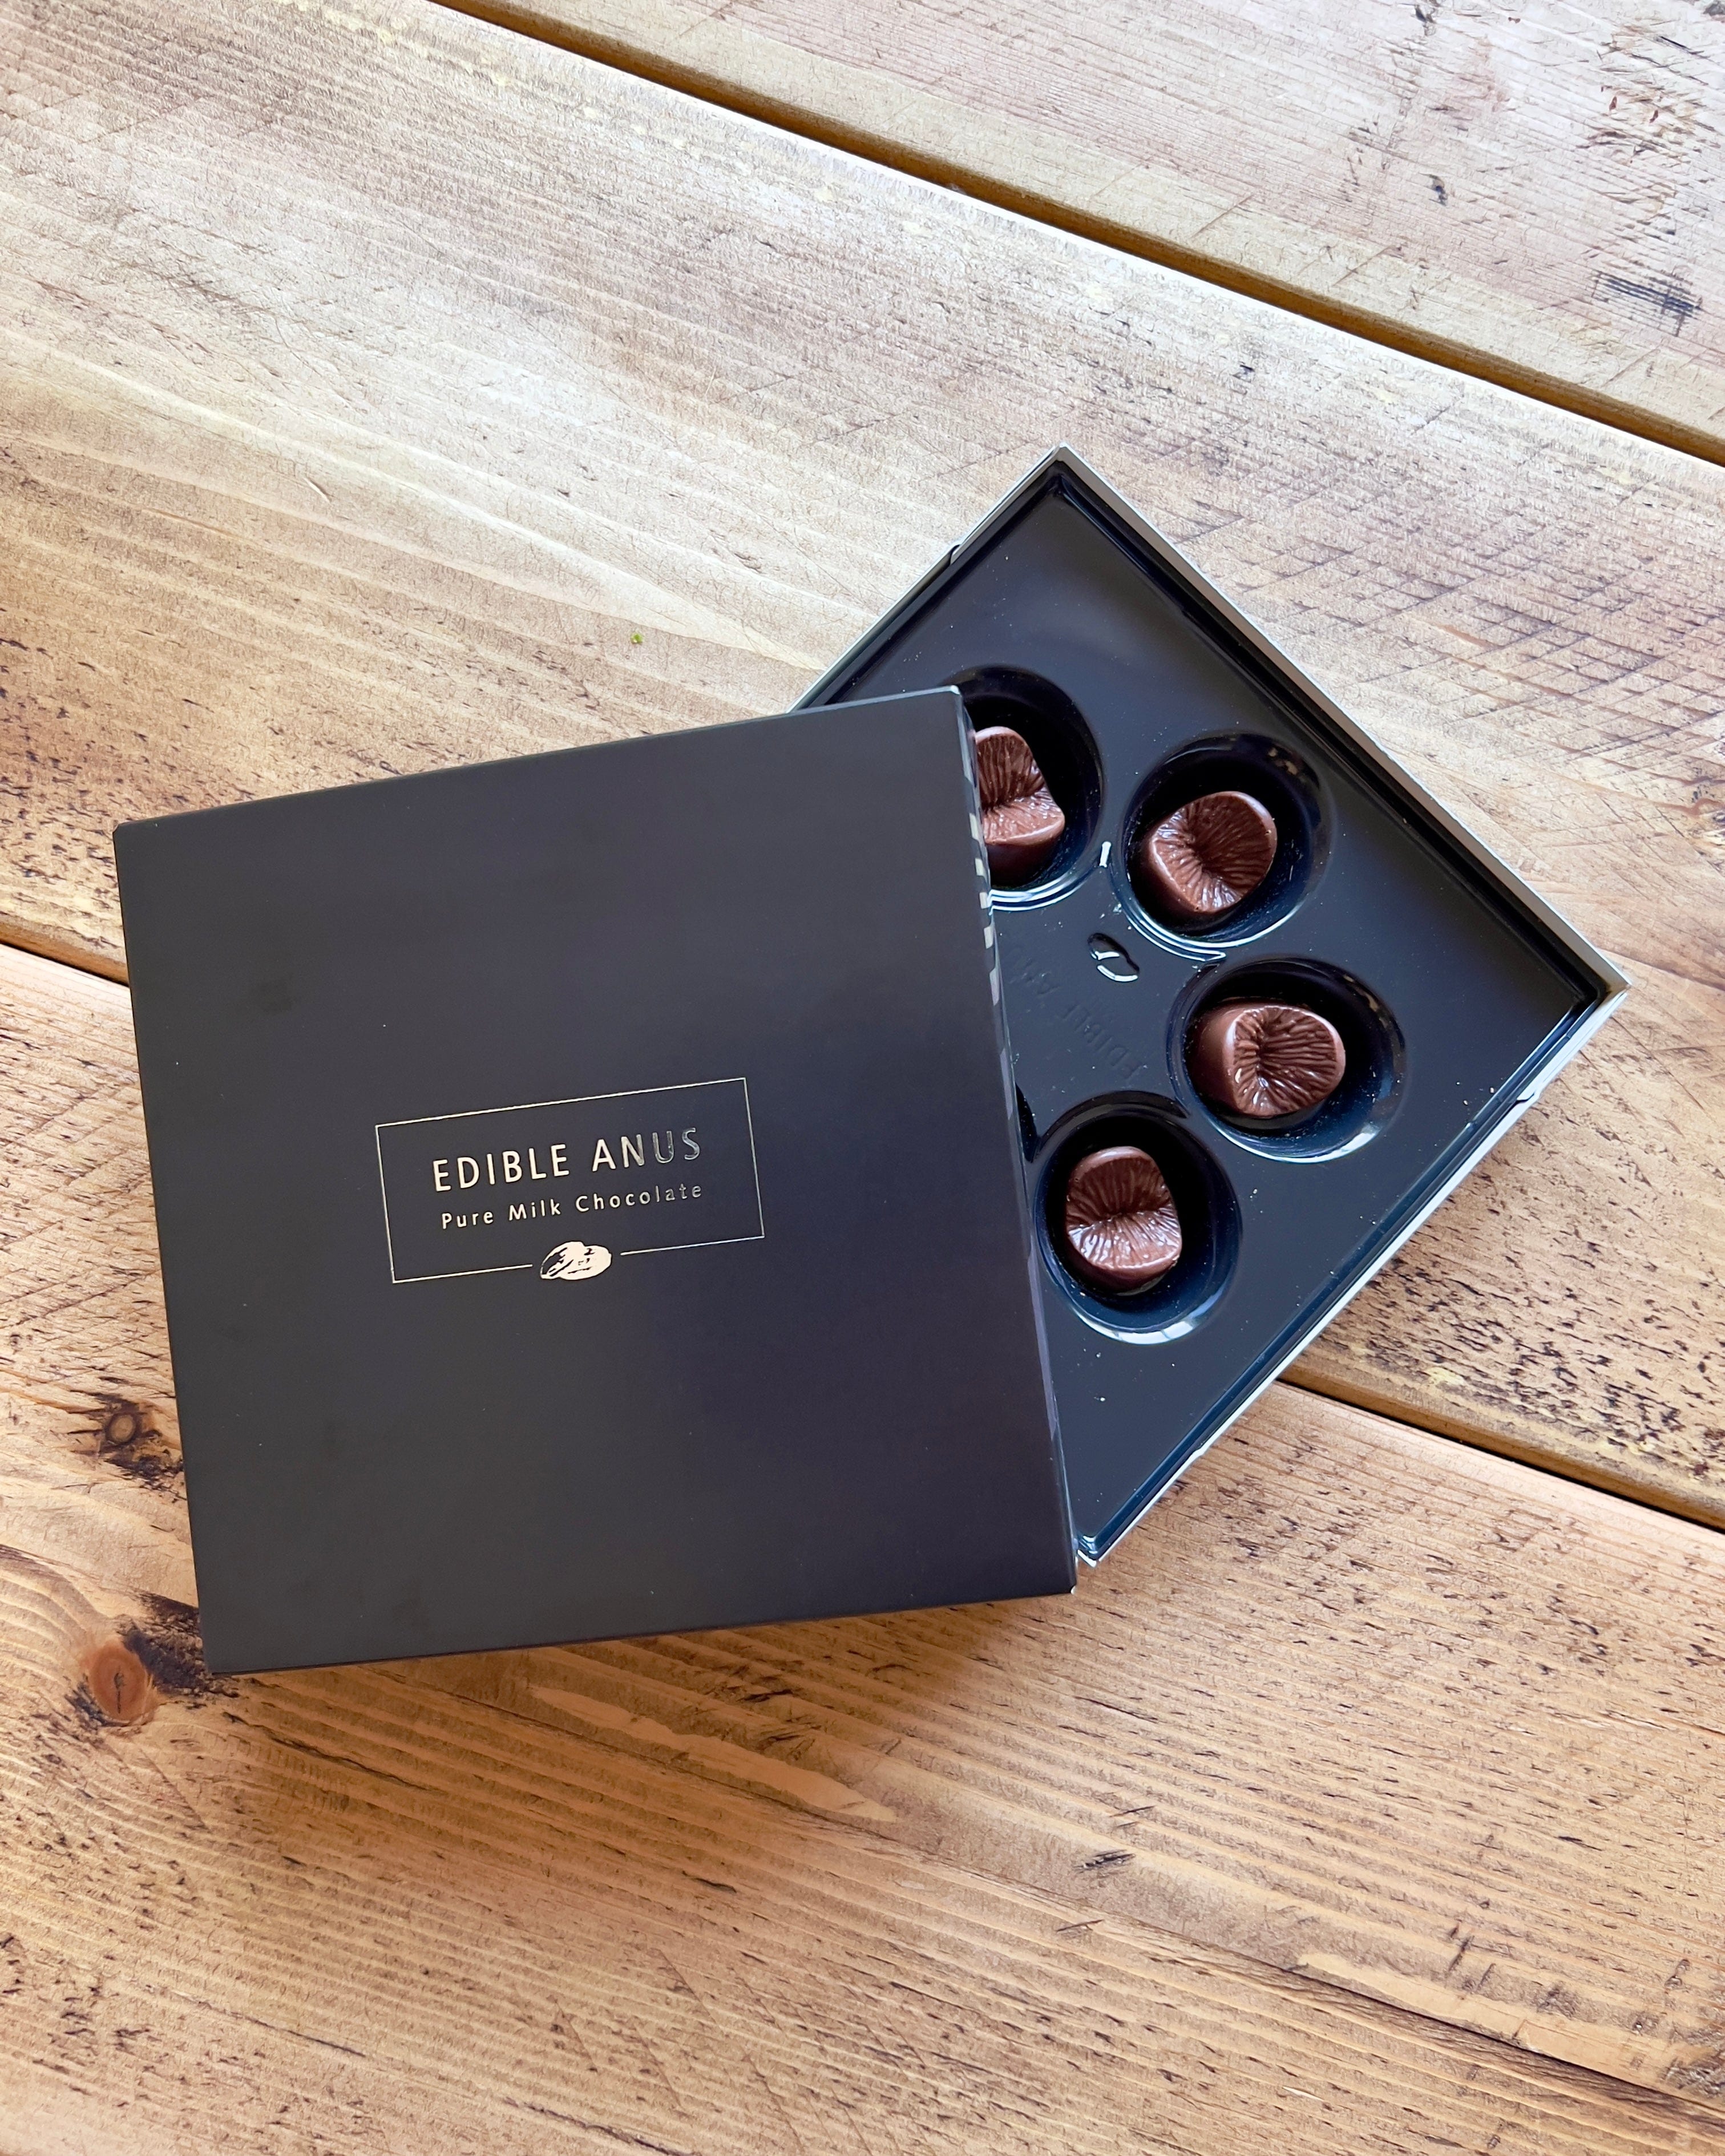 Sexy box of edible anus chocolates